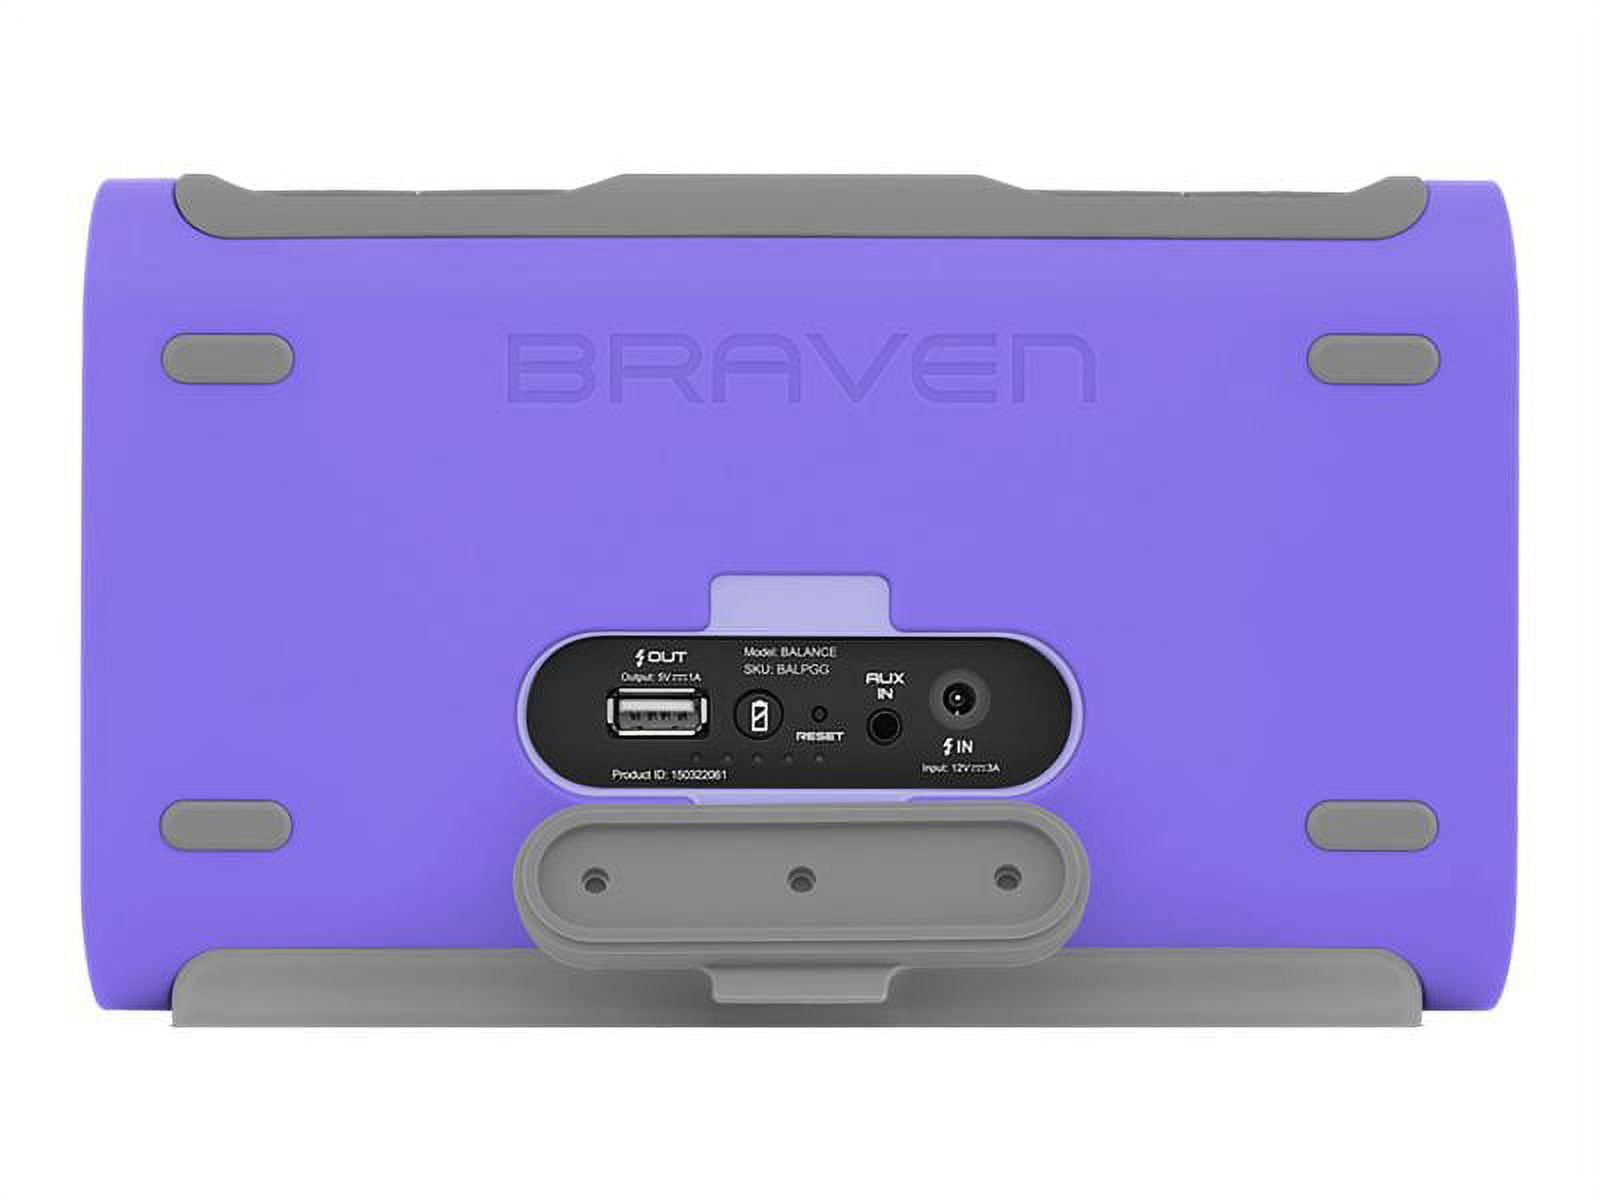 Original Braven Balance Speaker